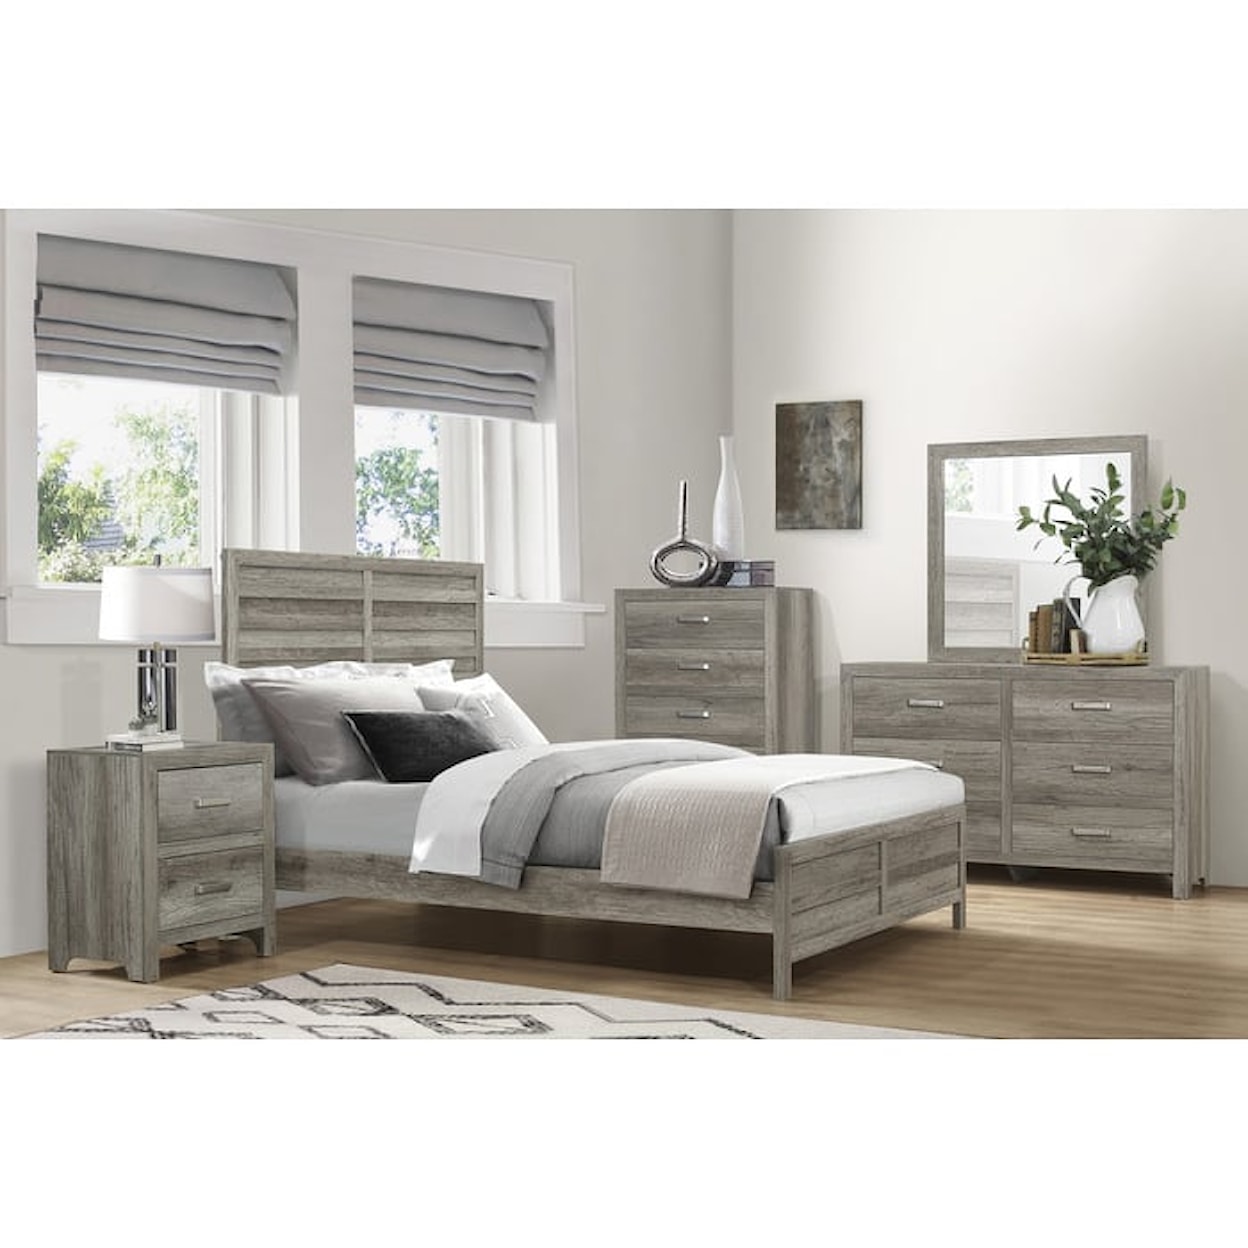 Homelegance Furniture Mandan 5-Drawer Bedroom Chest